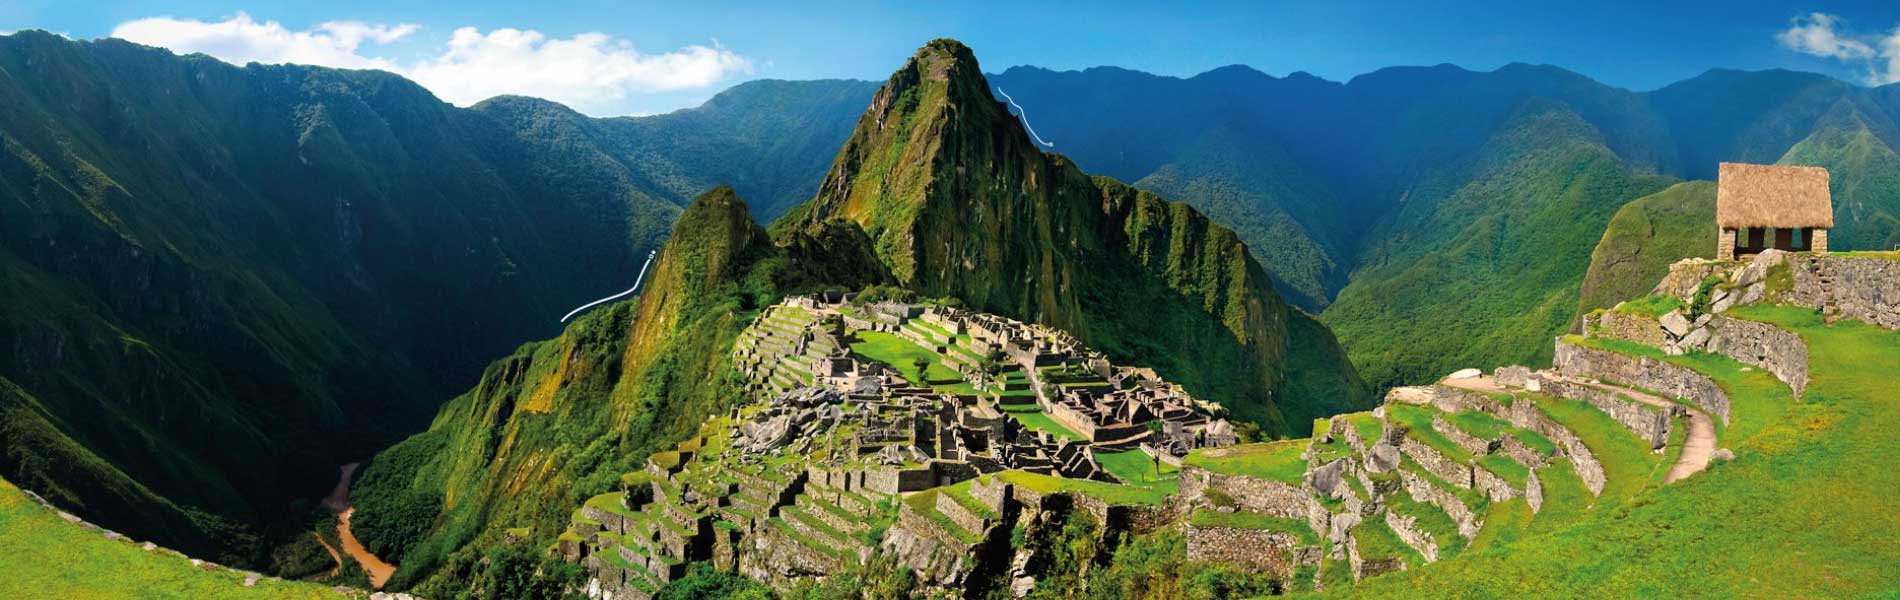 Peru Travel Agency